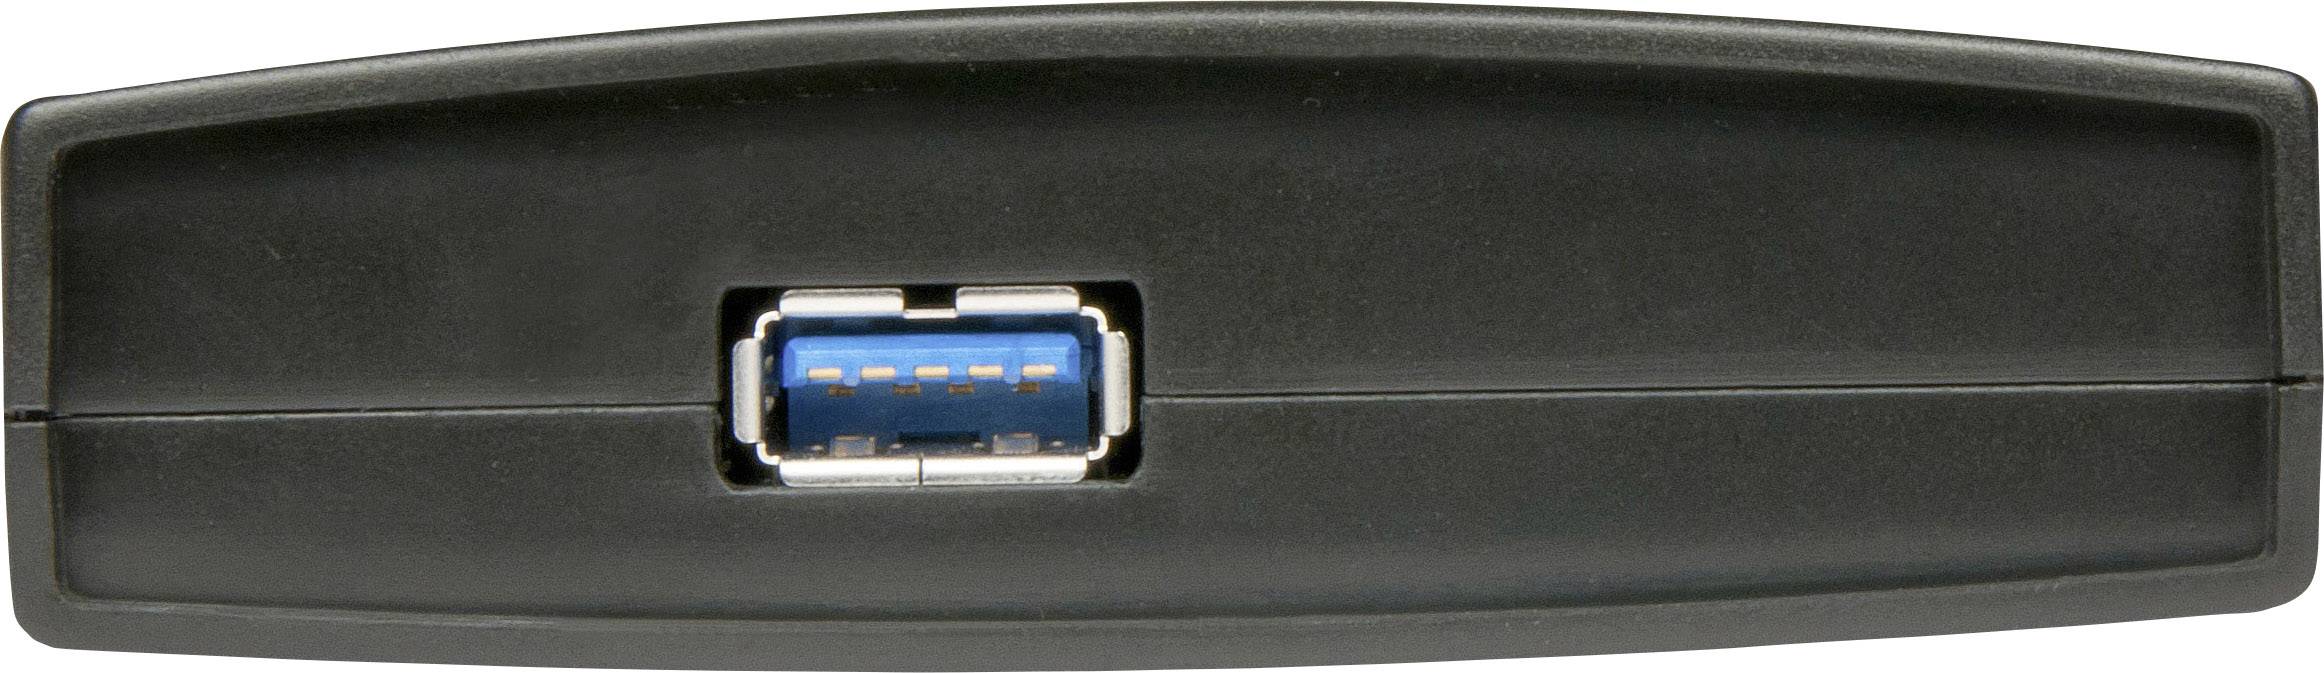 LINDY USB 3.0 Switch 2 Port